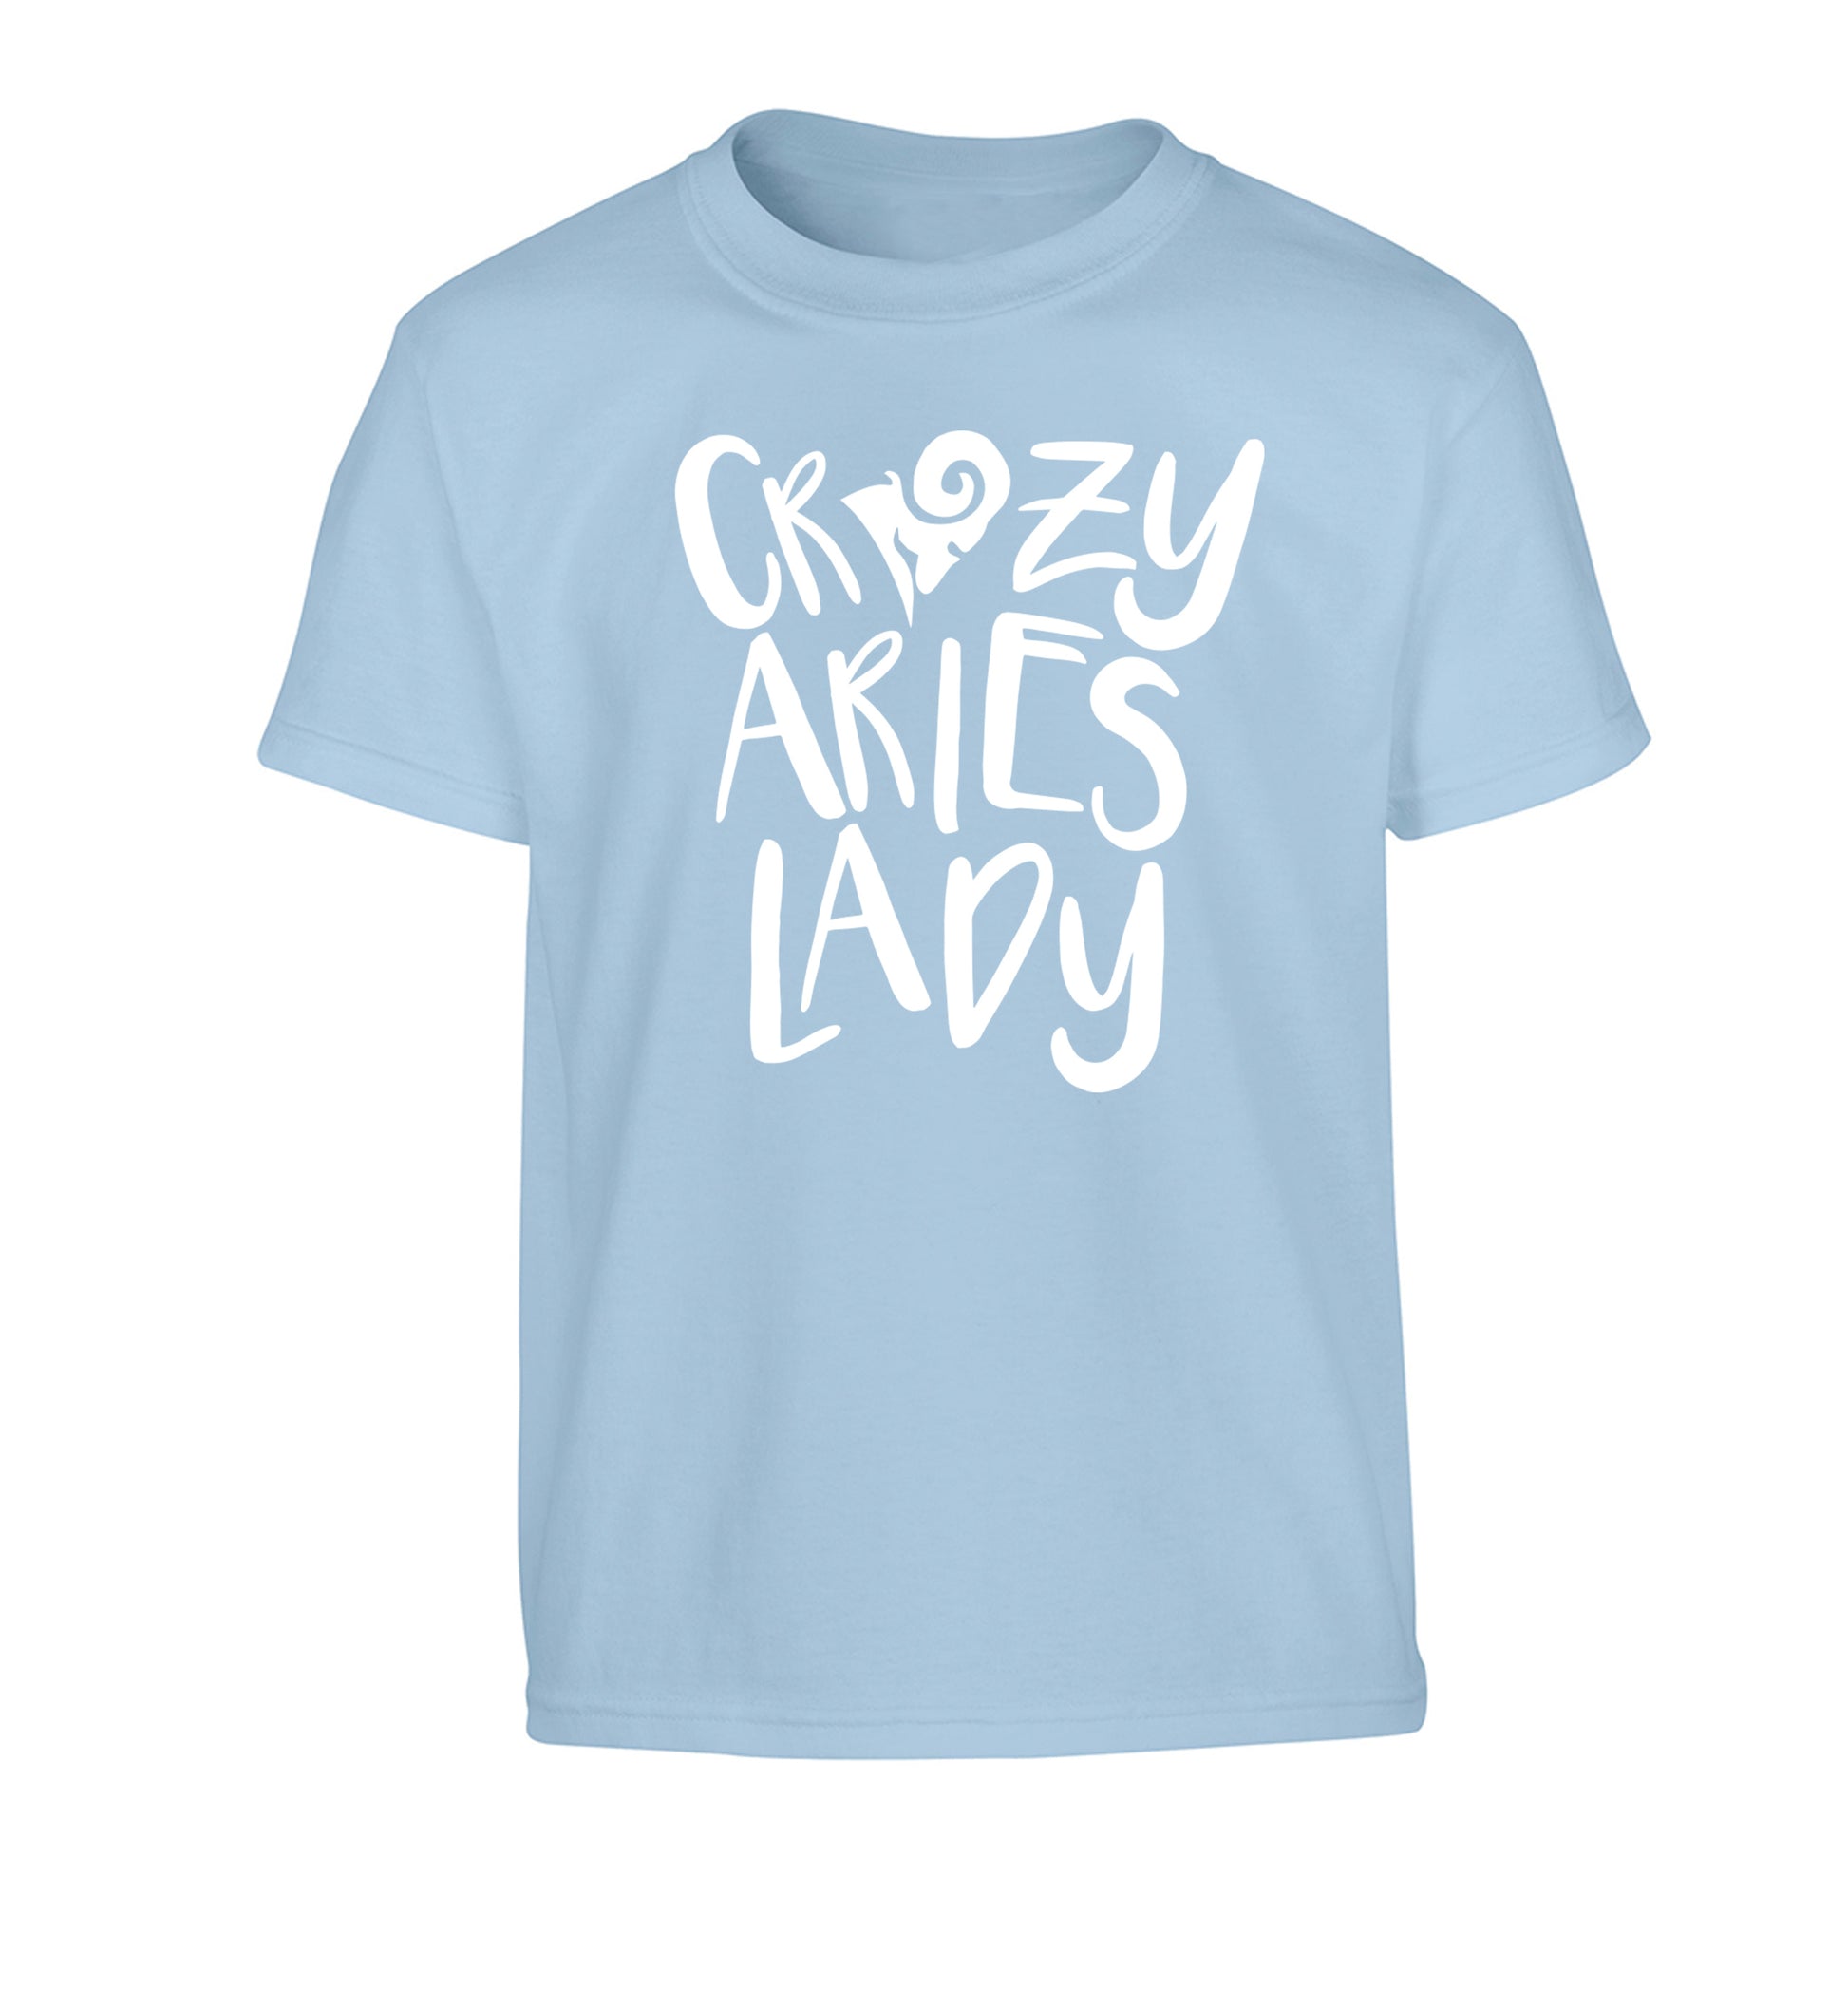 Crazy aries lady Children's light blue Tshirt 12-13 Years